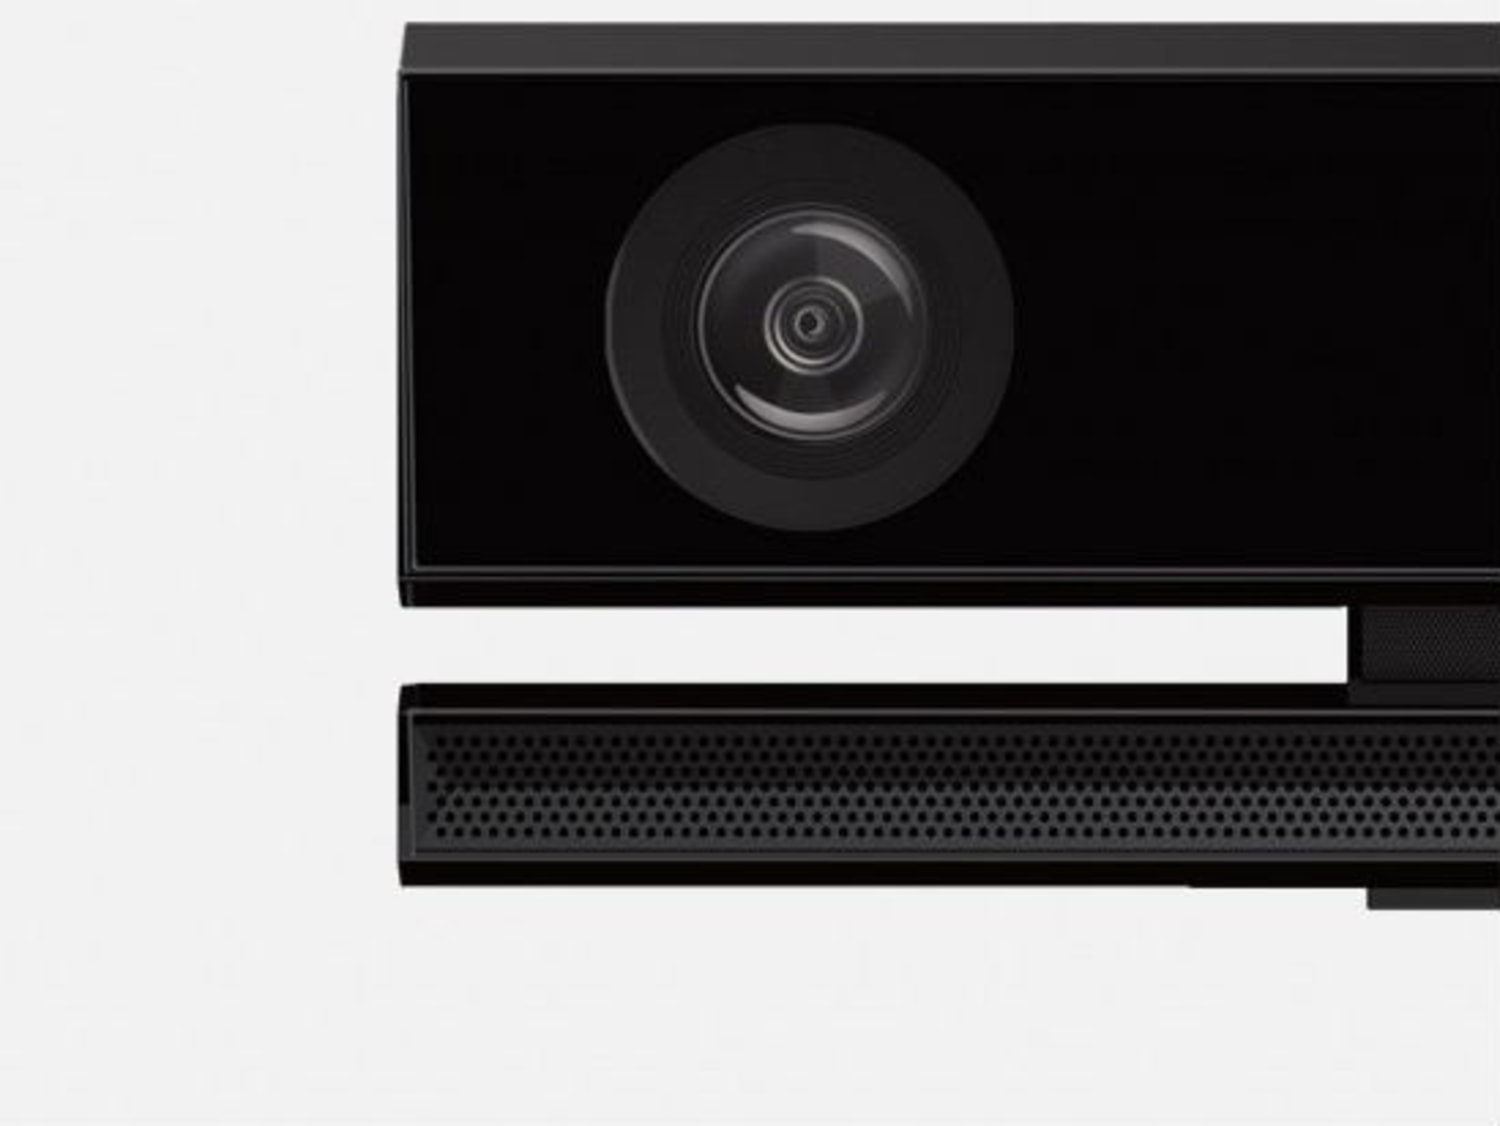 Microsoft Xbox One Kinect Sensor 